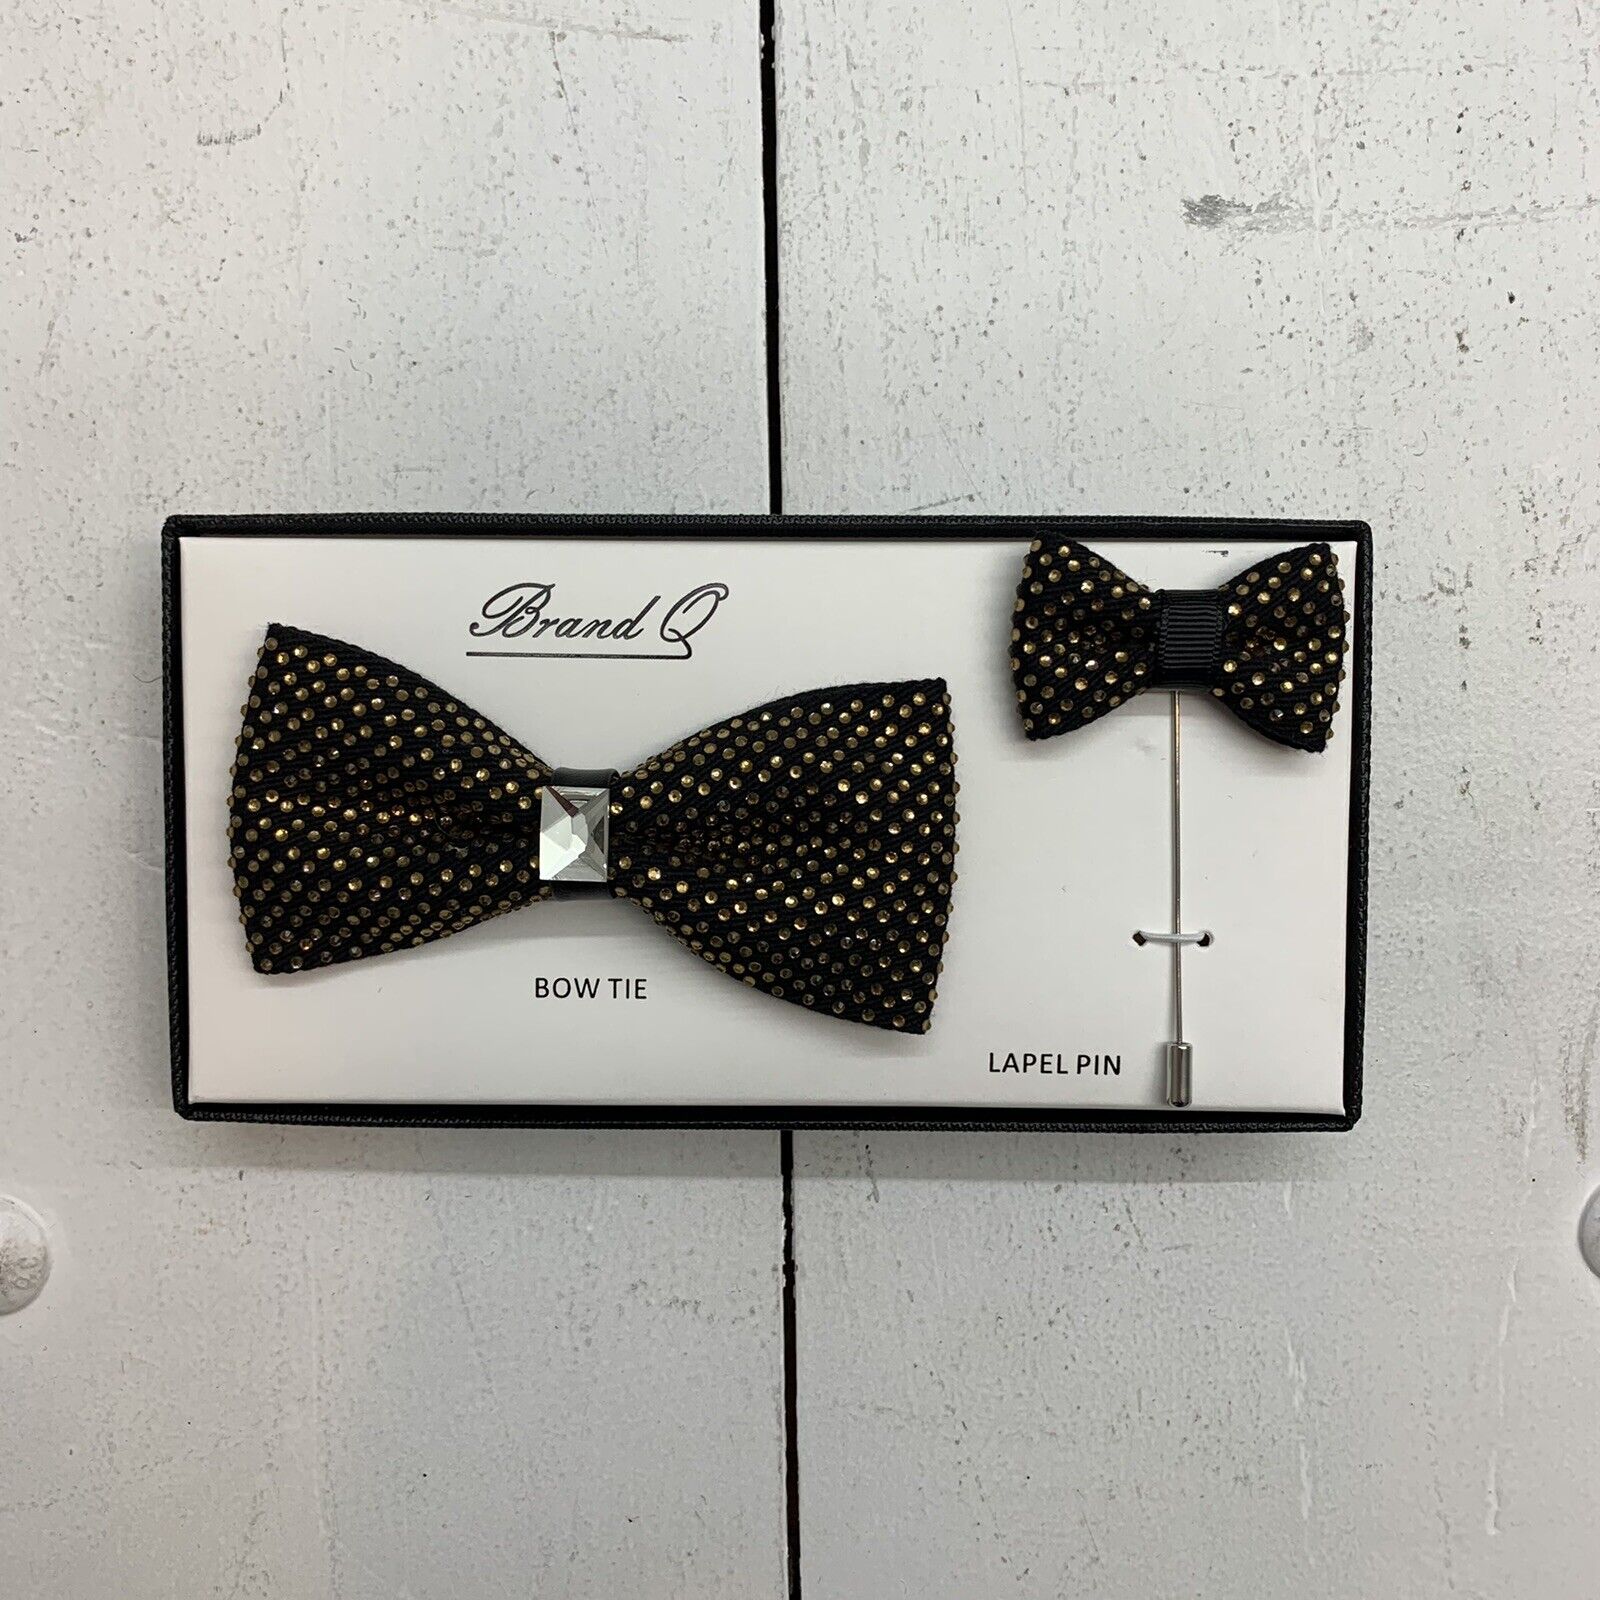 Brand Q Black gold bow tie & Label Pin